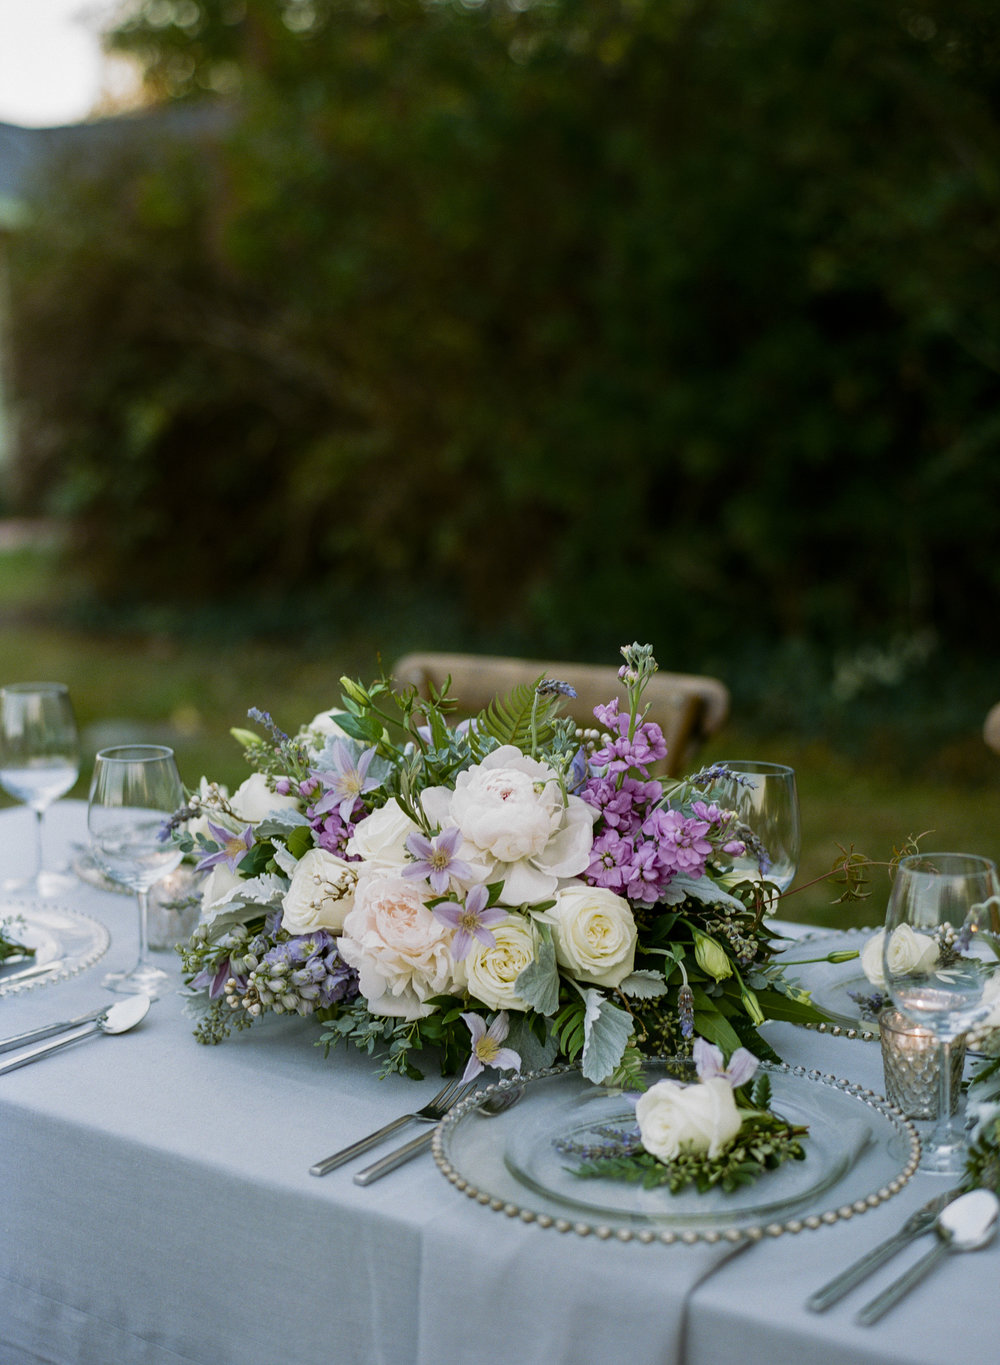 Violette-fleurs-roseville-sacramento-california-Flower-farm-inn-wedding-florist-spring-tablescape-purples-blushes-grays-upscale-design.jpg